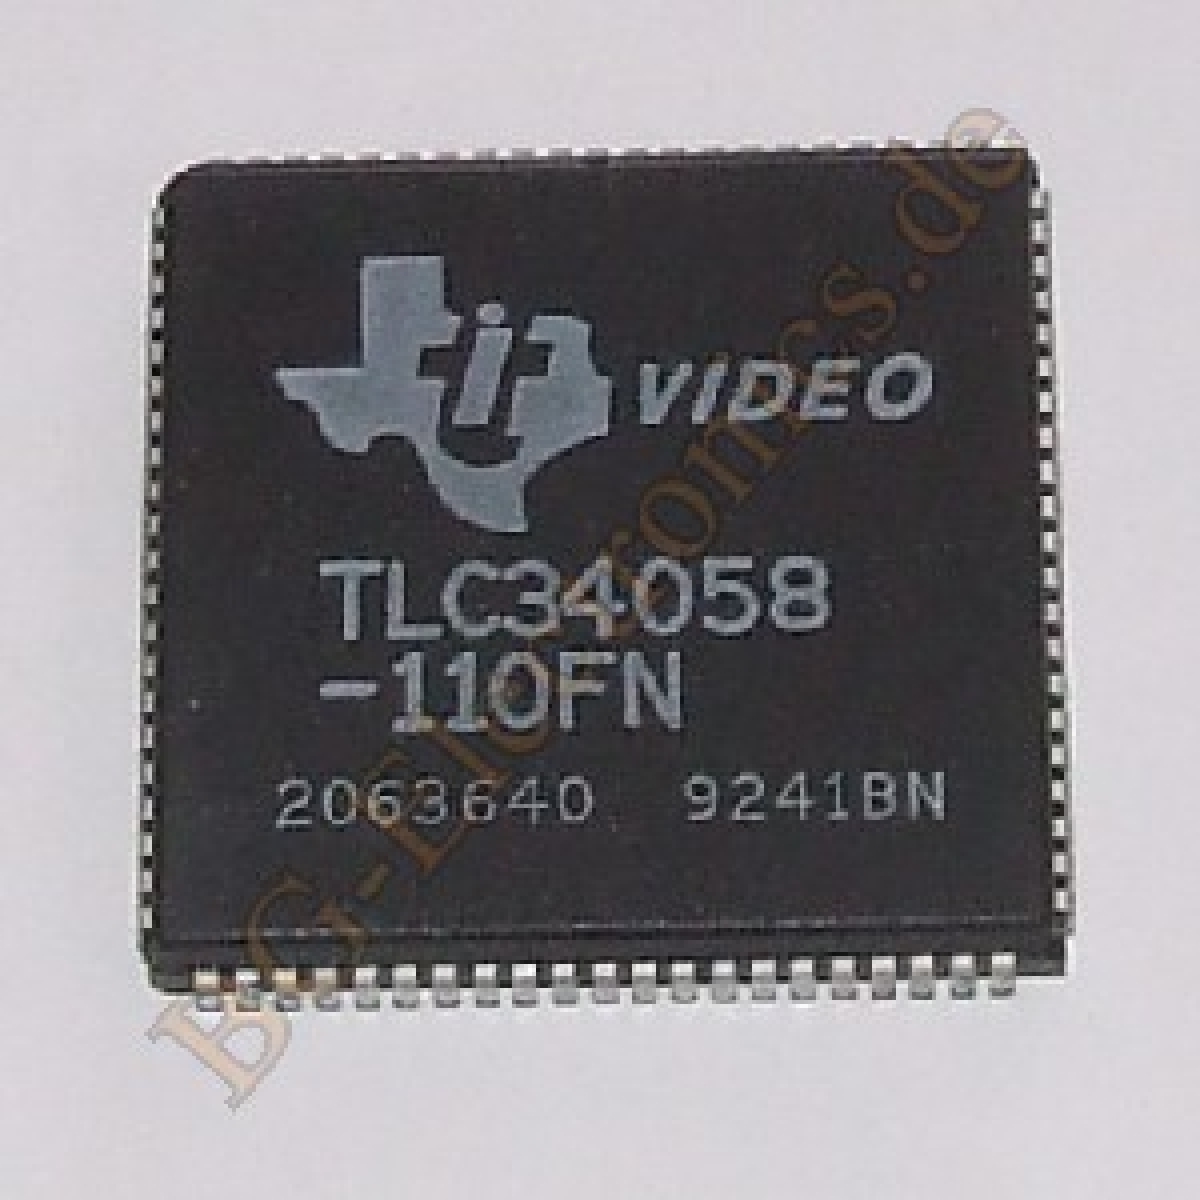 TLC34058-110FN